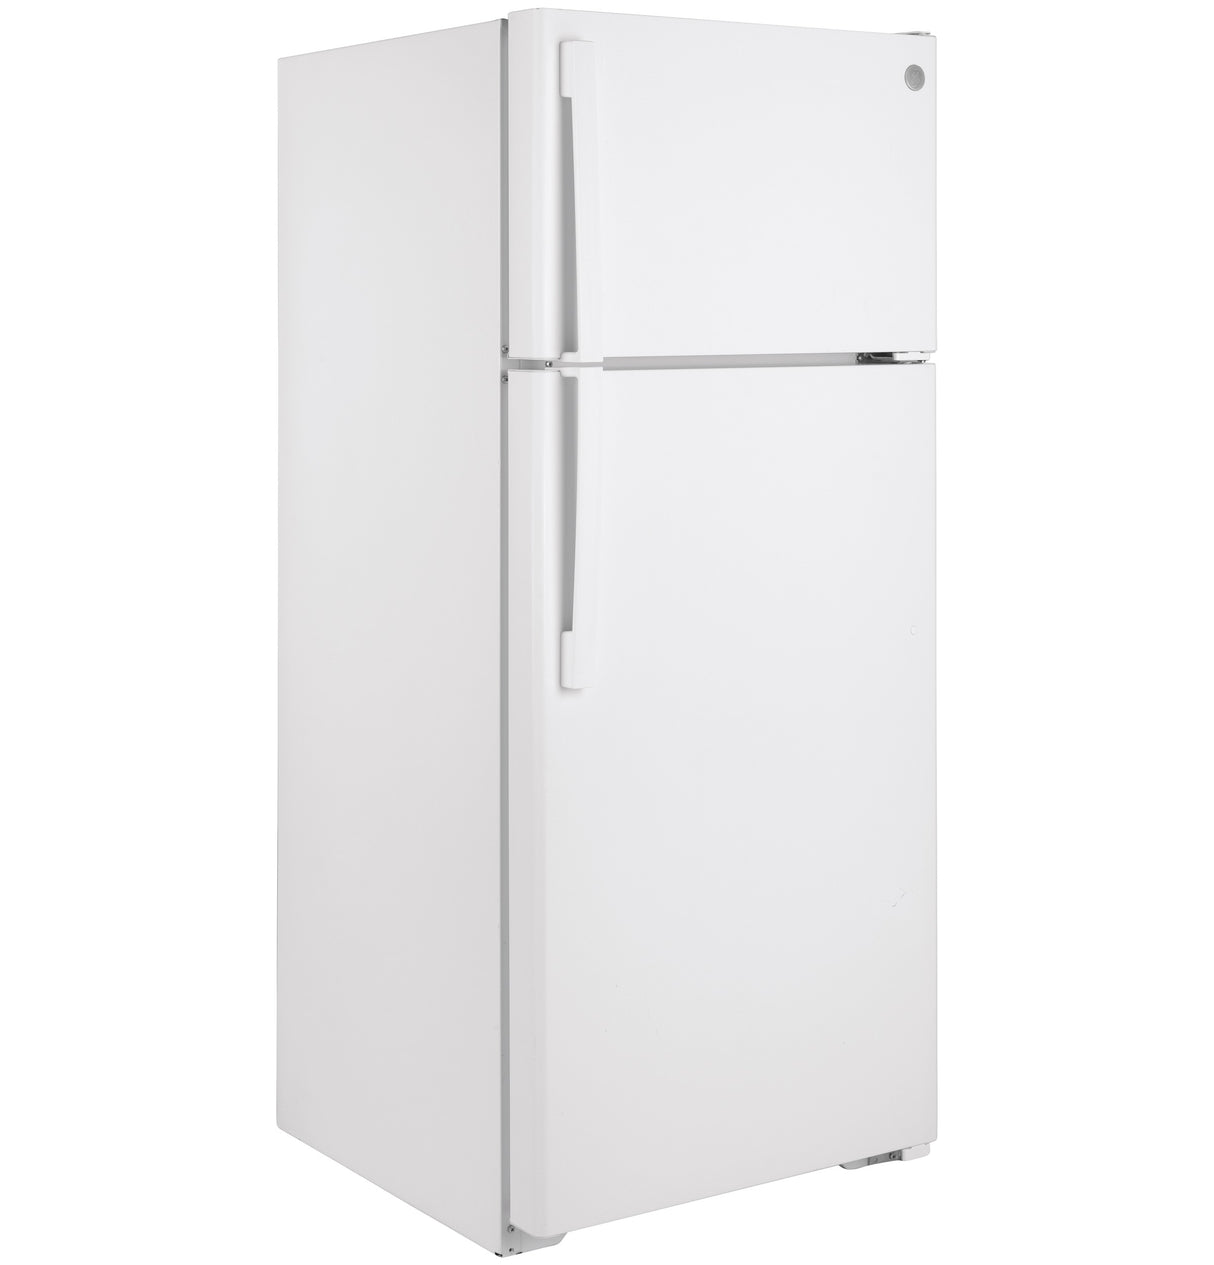 GE(R) ENERGY STAR(R) 17.5 Cu. Ft. Top-Freezer Refrigerator - (GIE18GTNRWW)